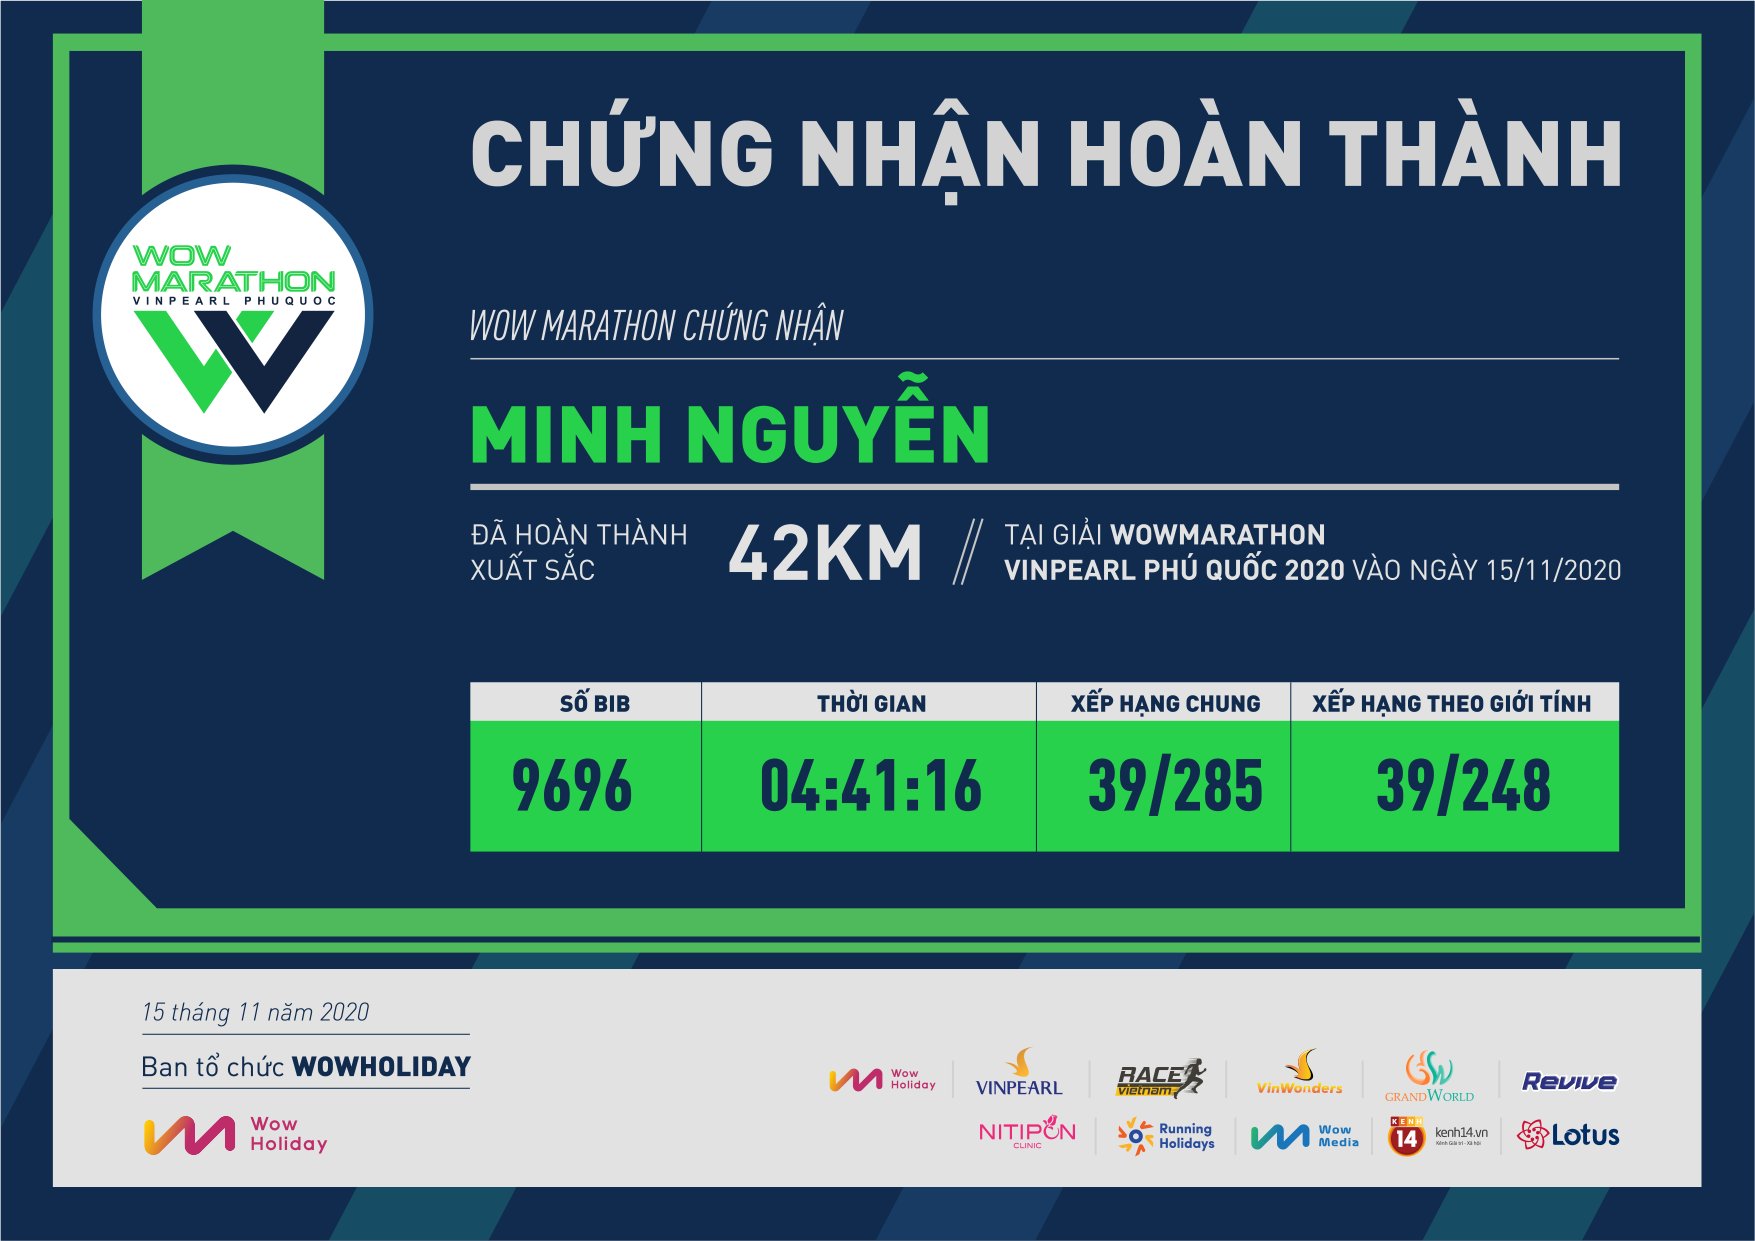 9696 - Minh Nguyễn